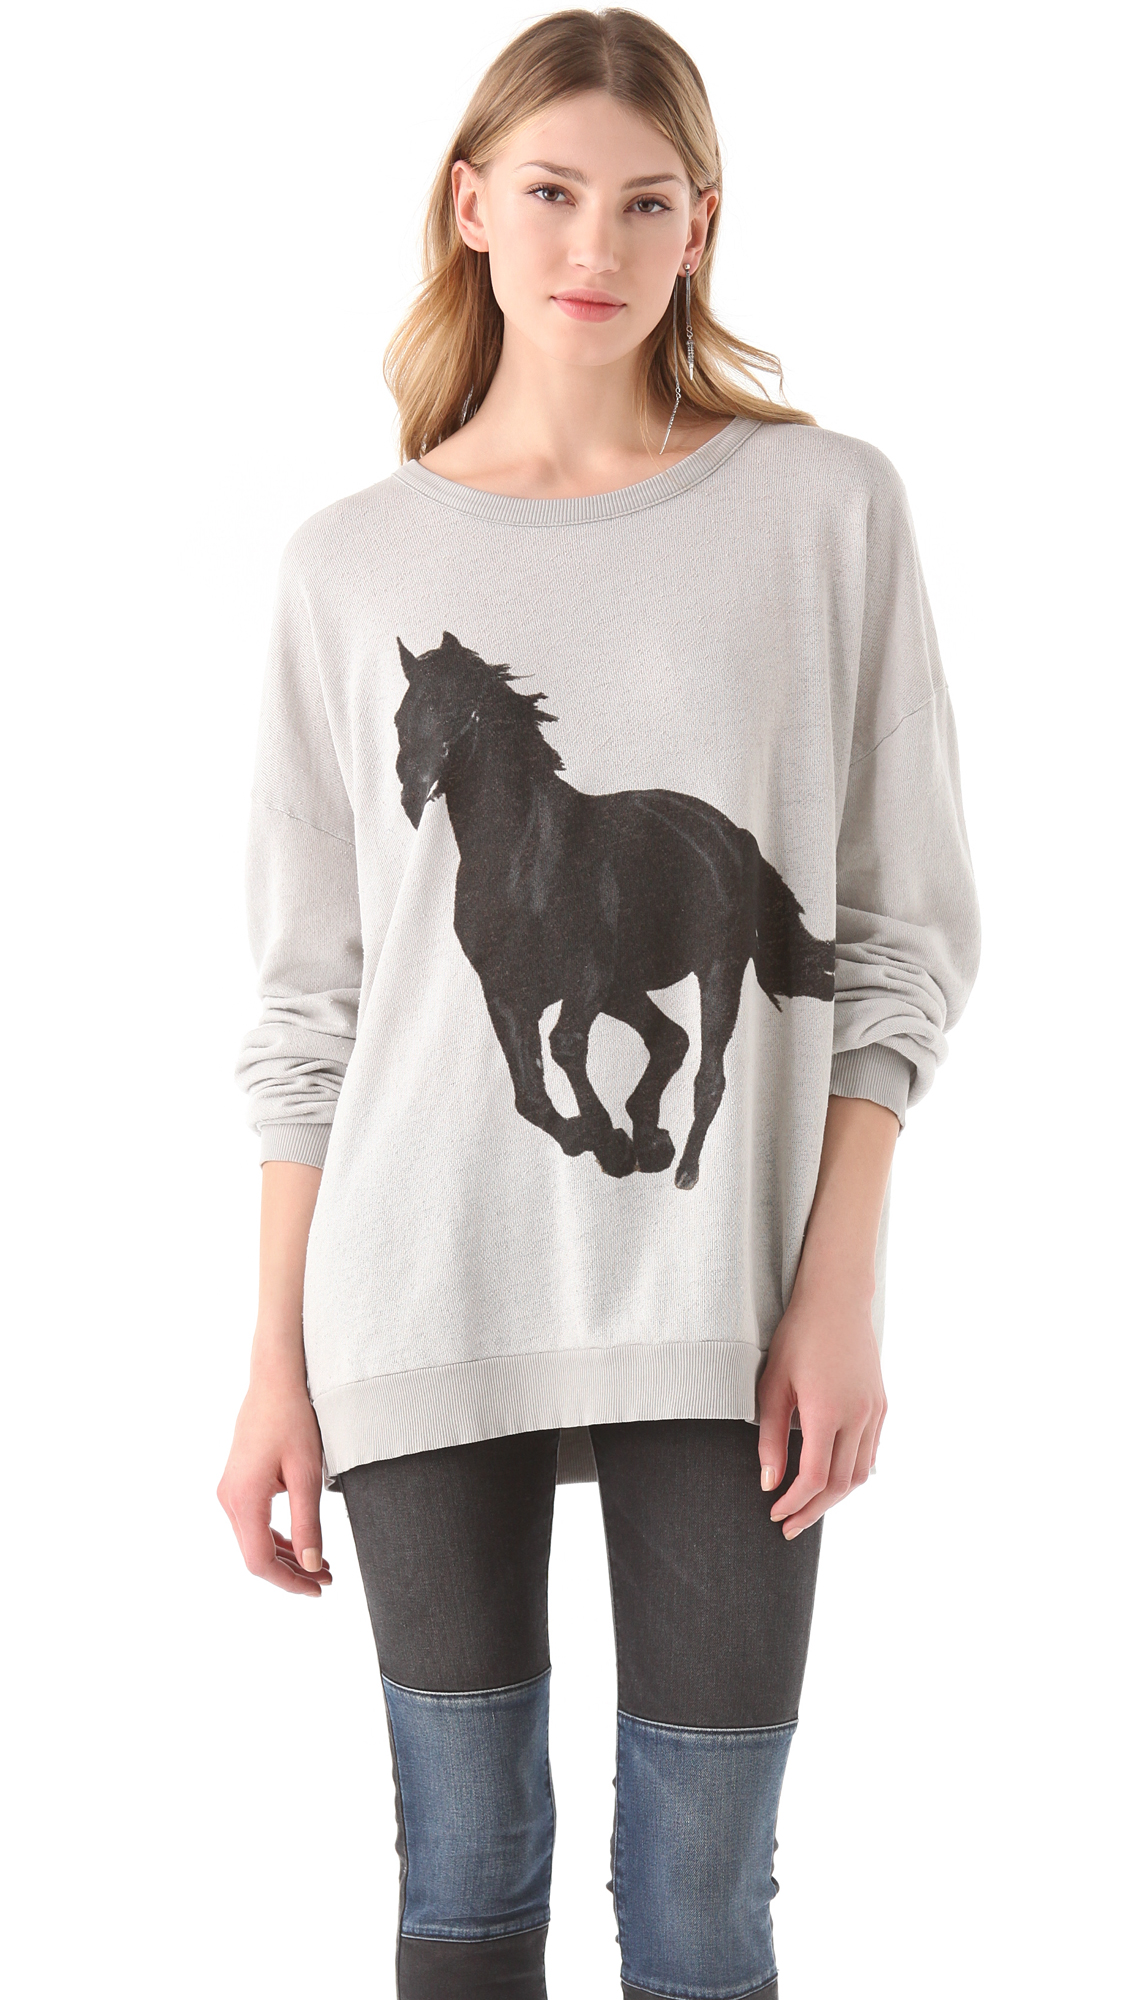 Lyst - Wildfox Black Stallion Barefoot Sweater in Gray